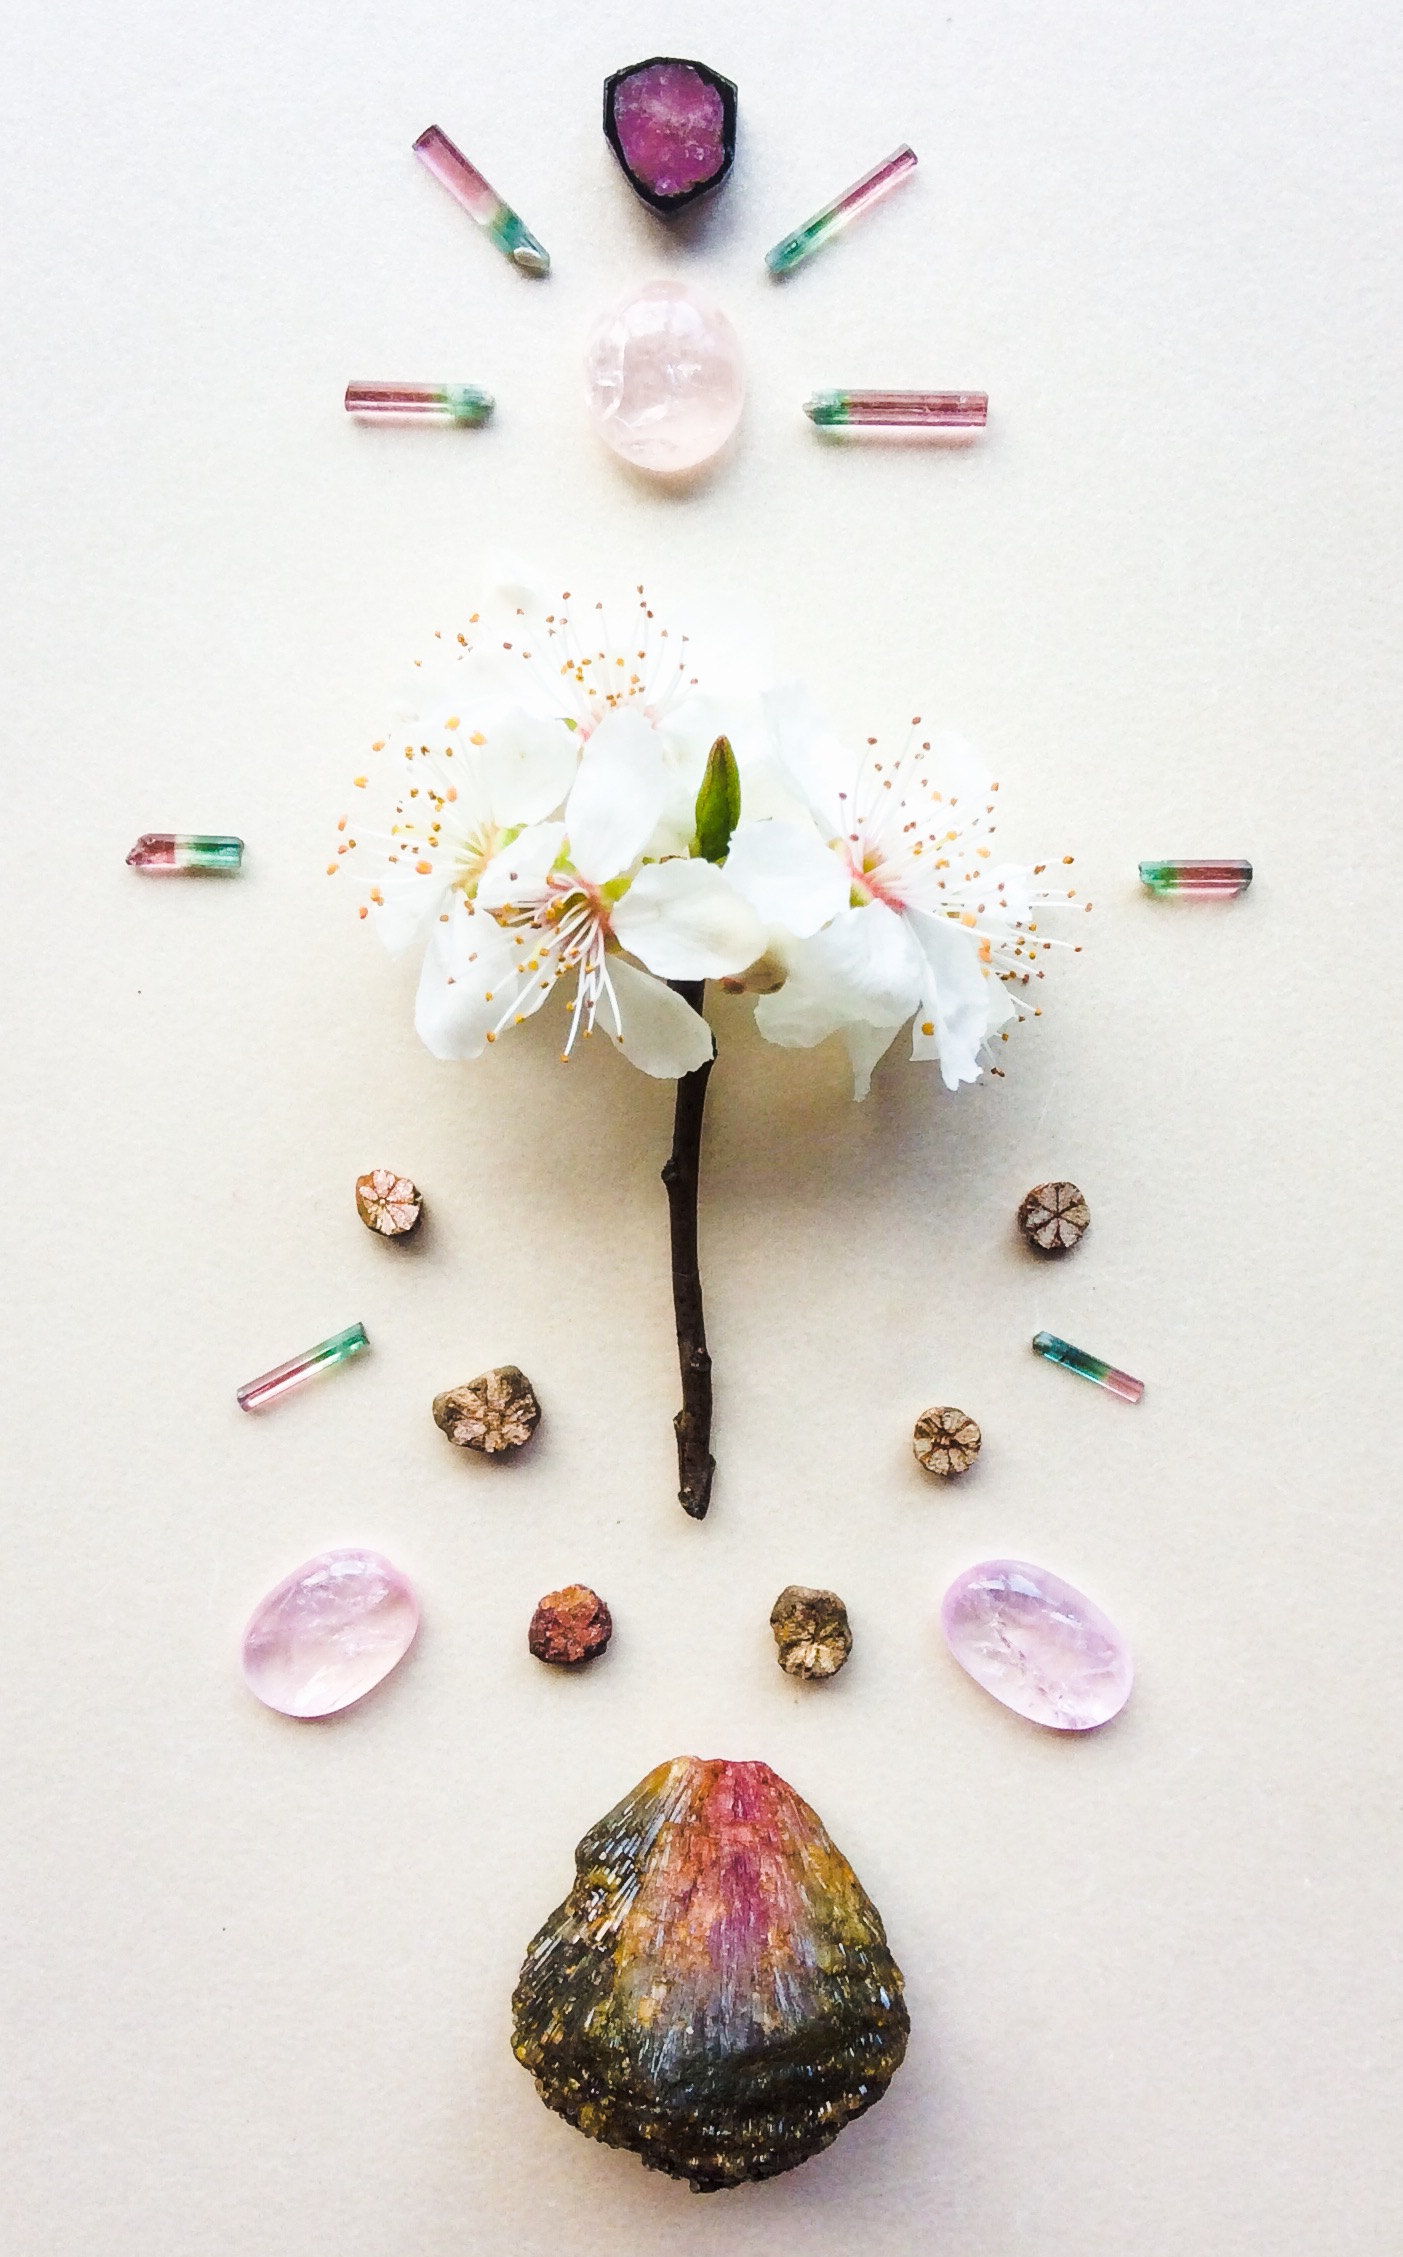 Morganite, Cherry Blossom Stones, Watermelon Tourmaline and Bi-Coloured Tourmaline with Cherry Blossom